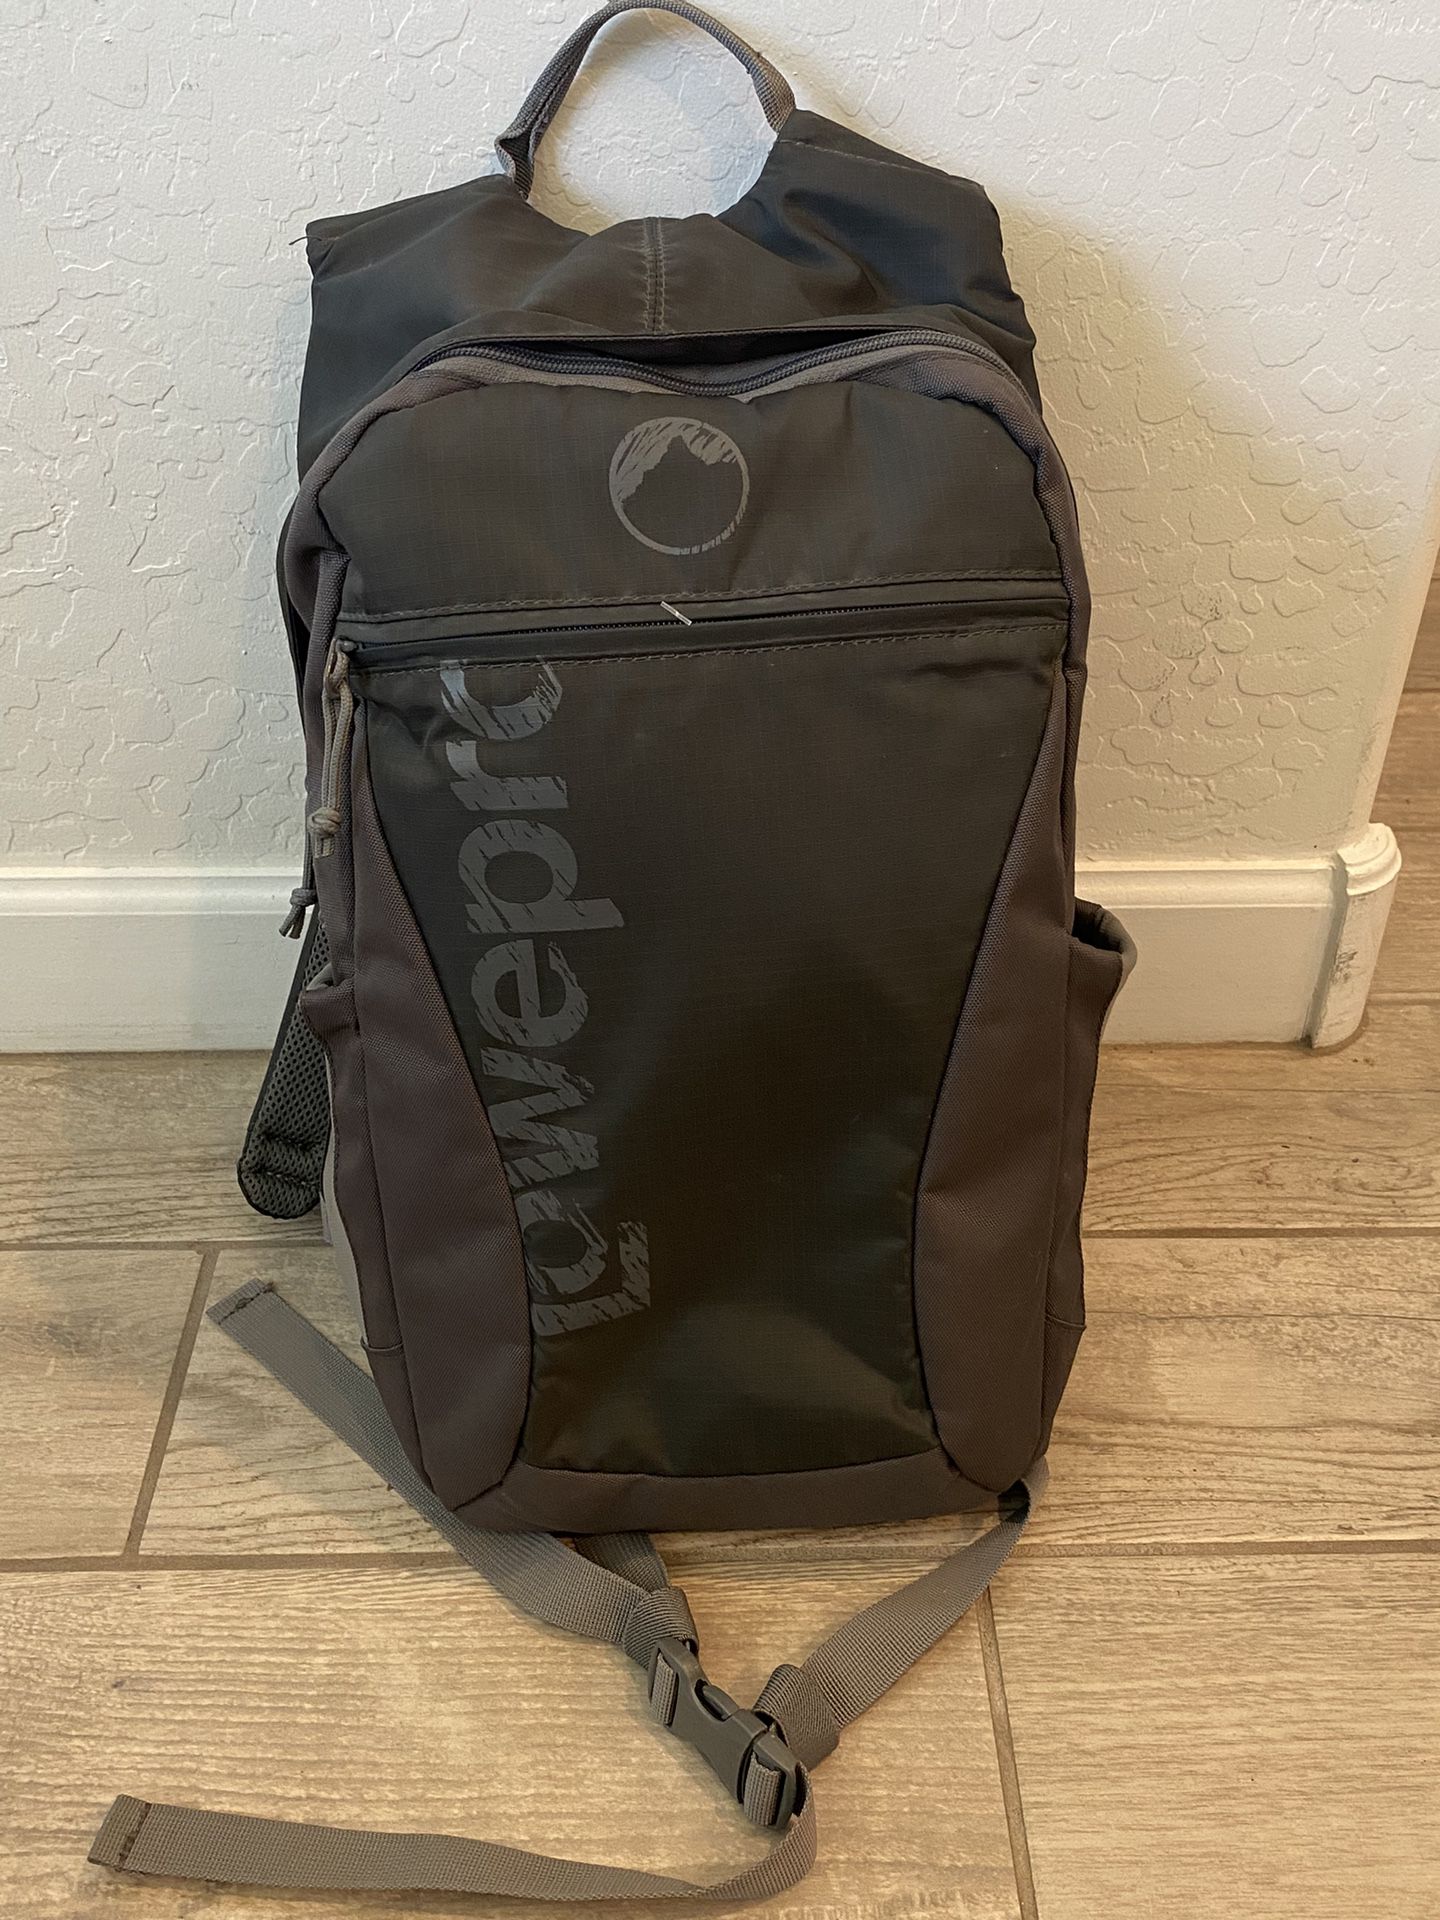 Lowepro Camera Backpack